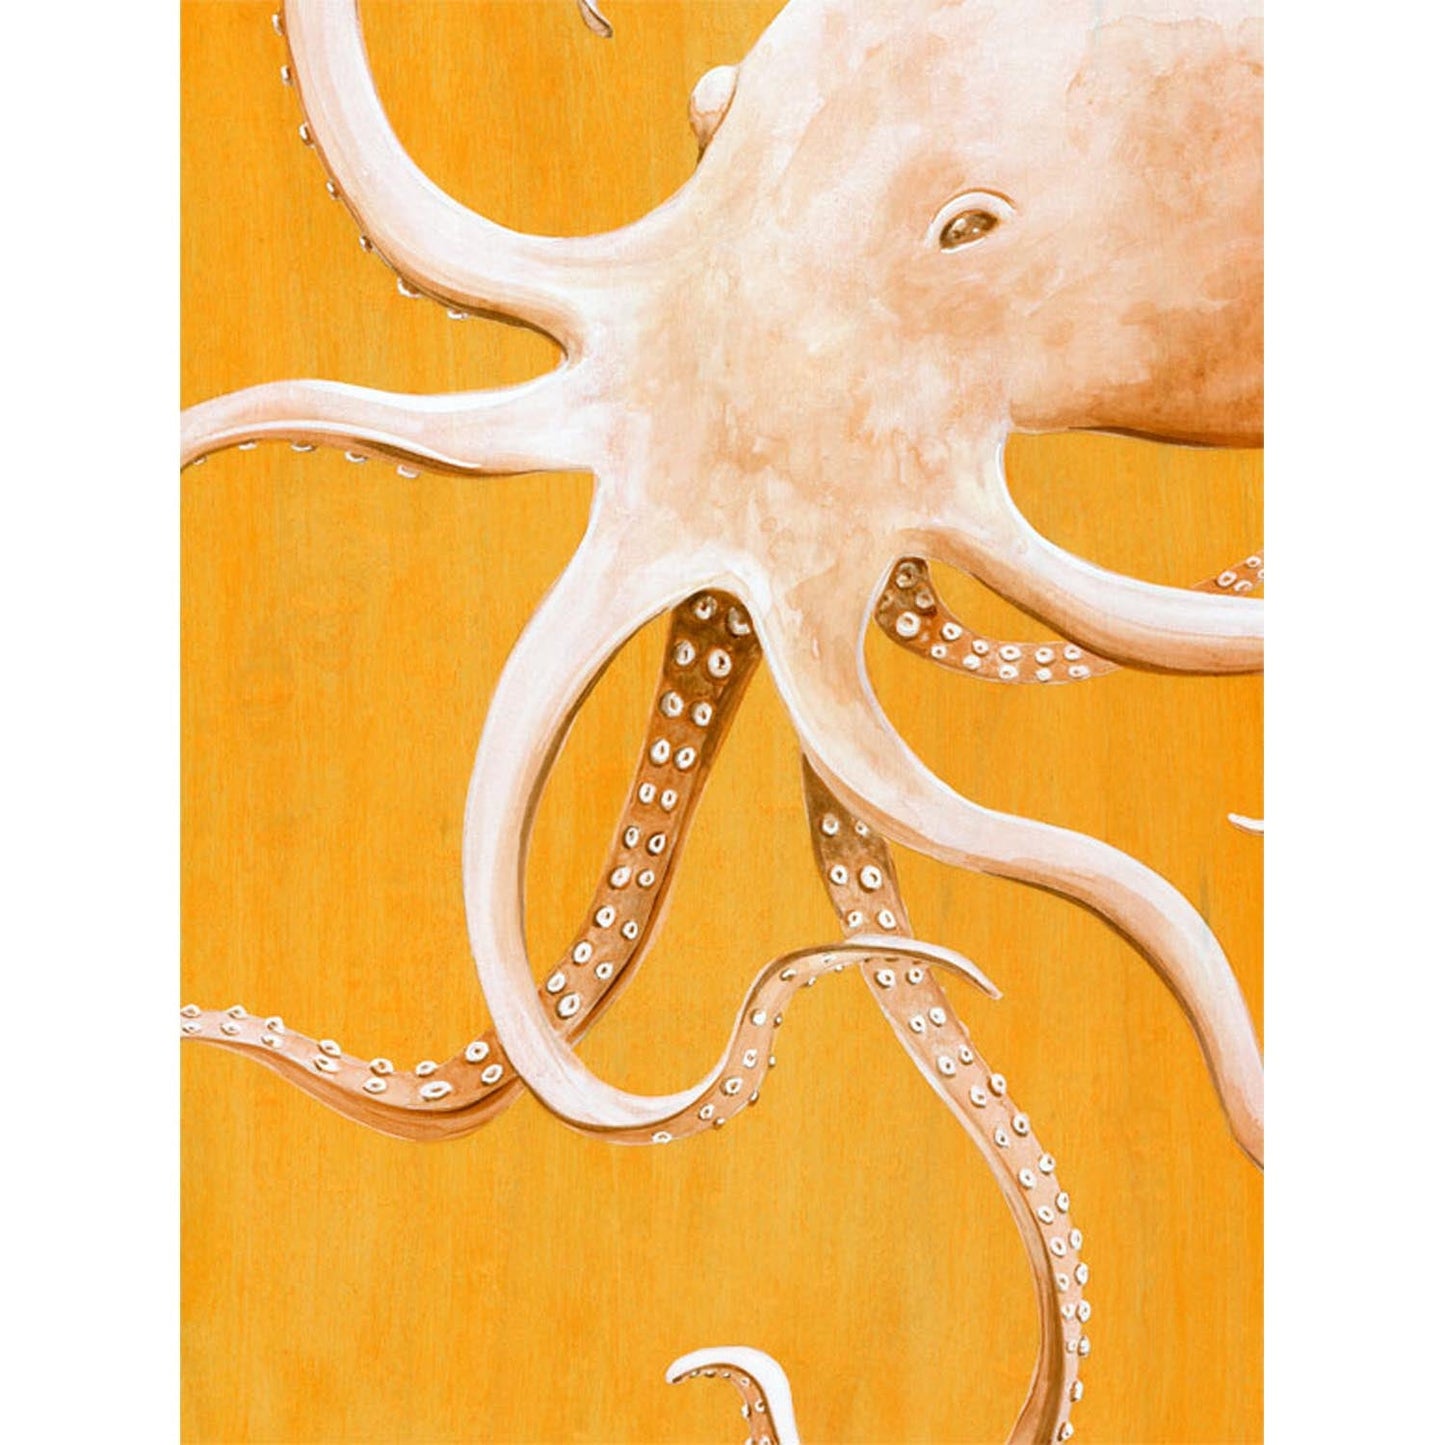 Orange Octopus Canvas Wall Art